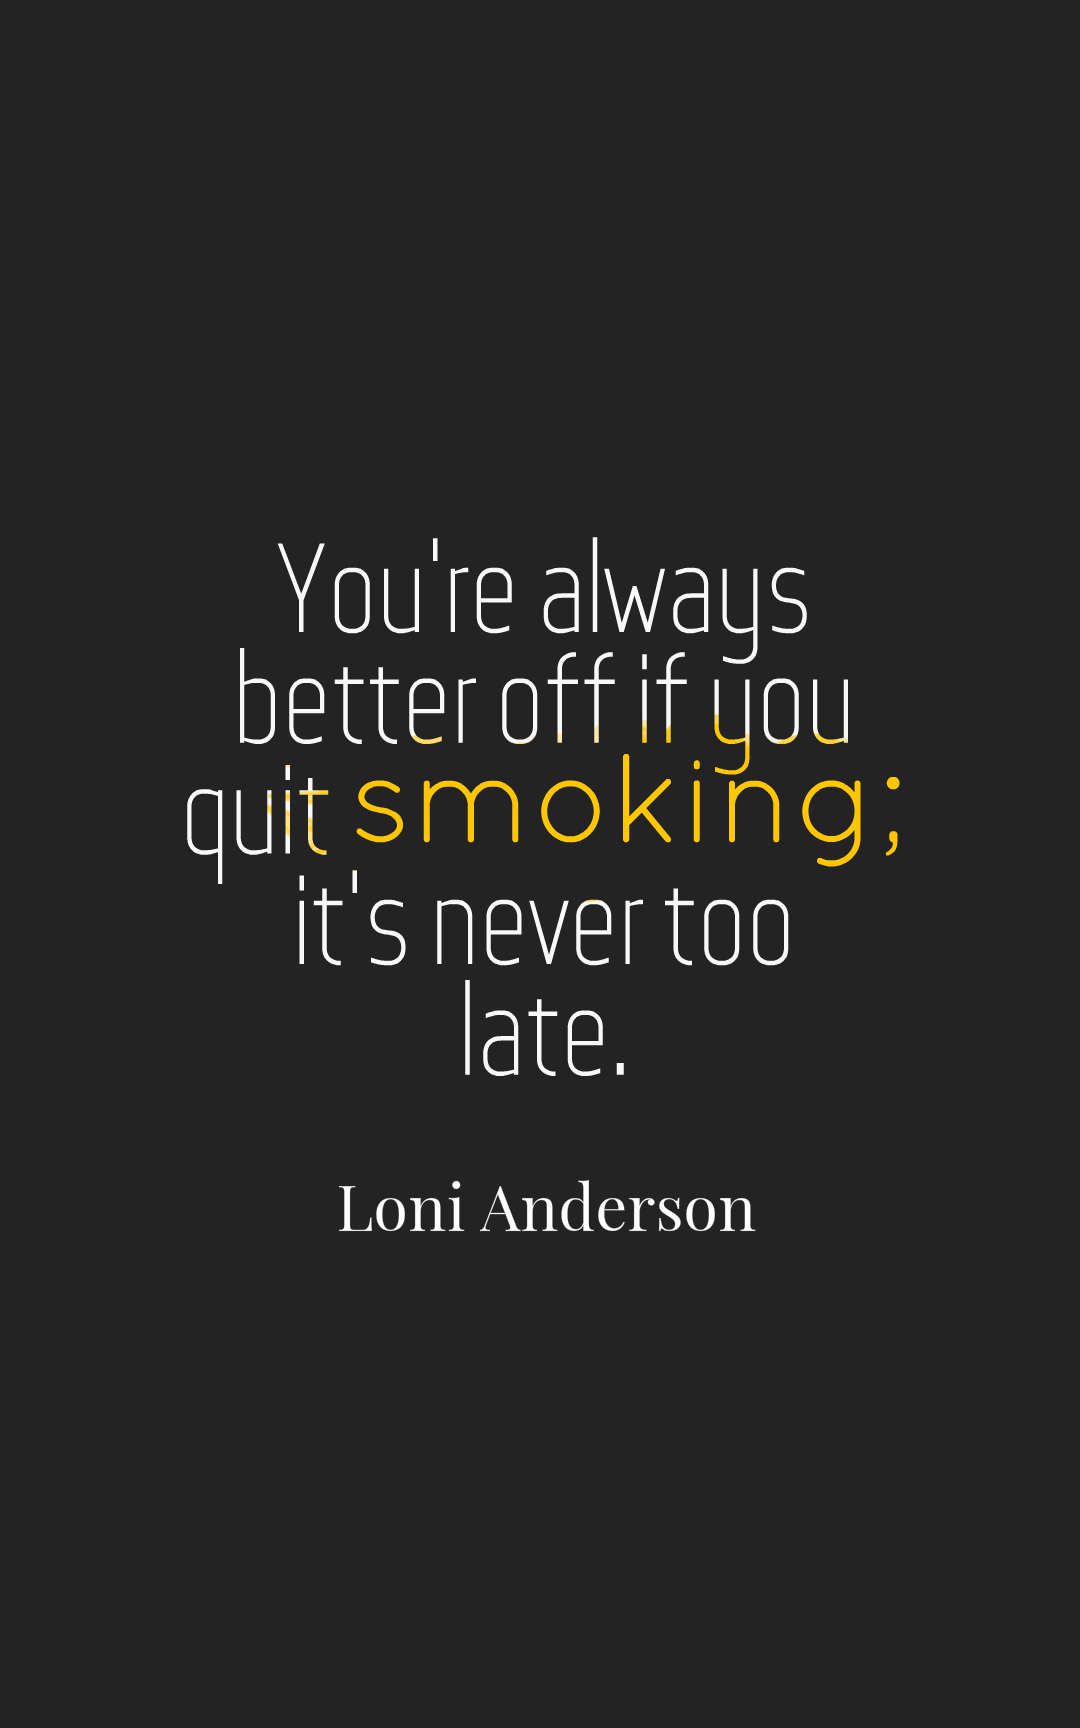 Best Smoking Quotes: 40 Inspiring Quotes About Smoking